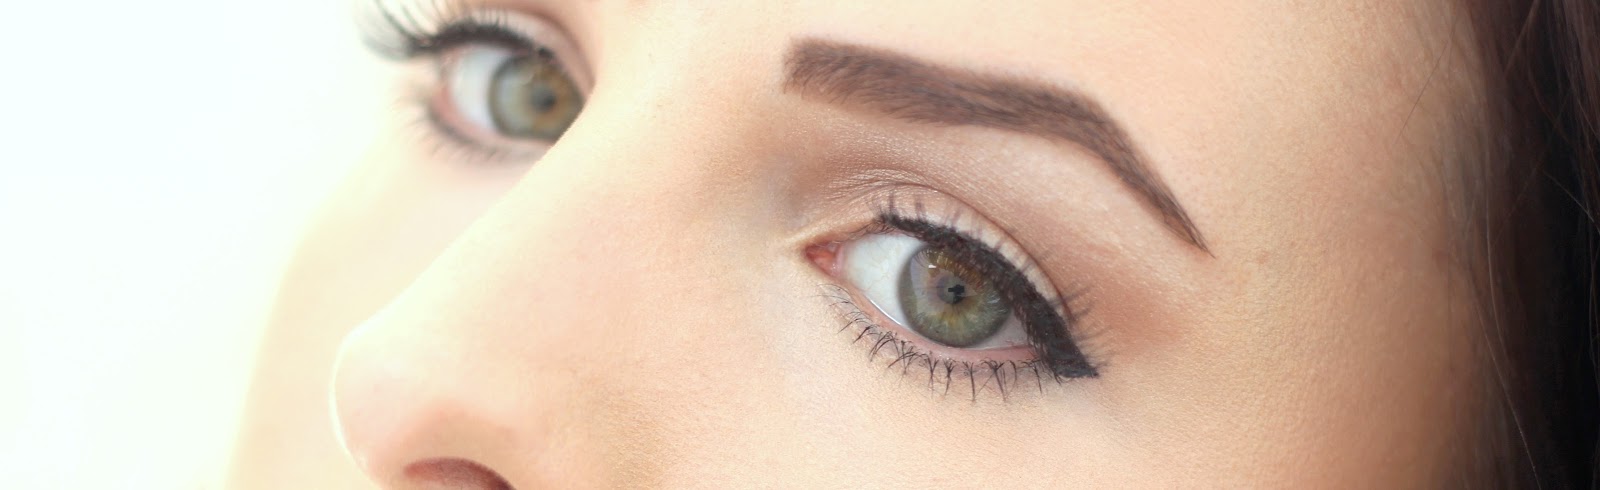 Kylie Jenner eye makeup